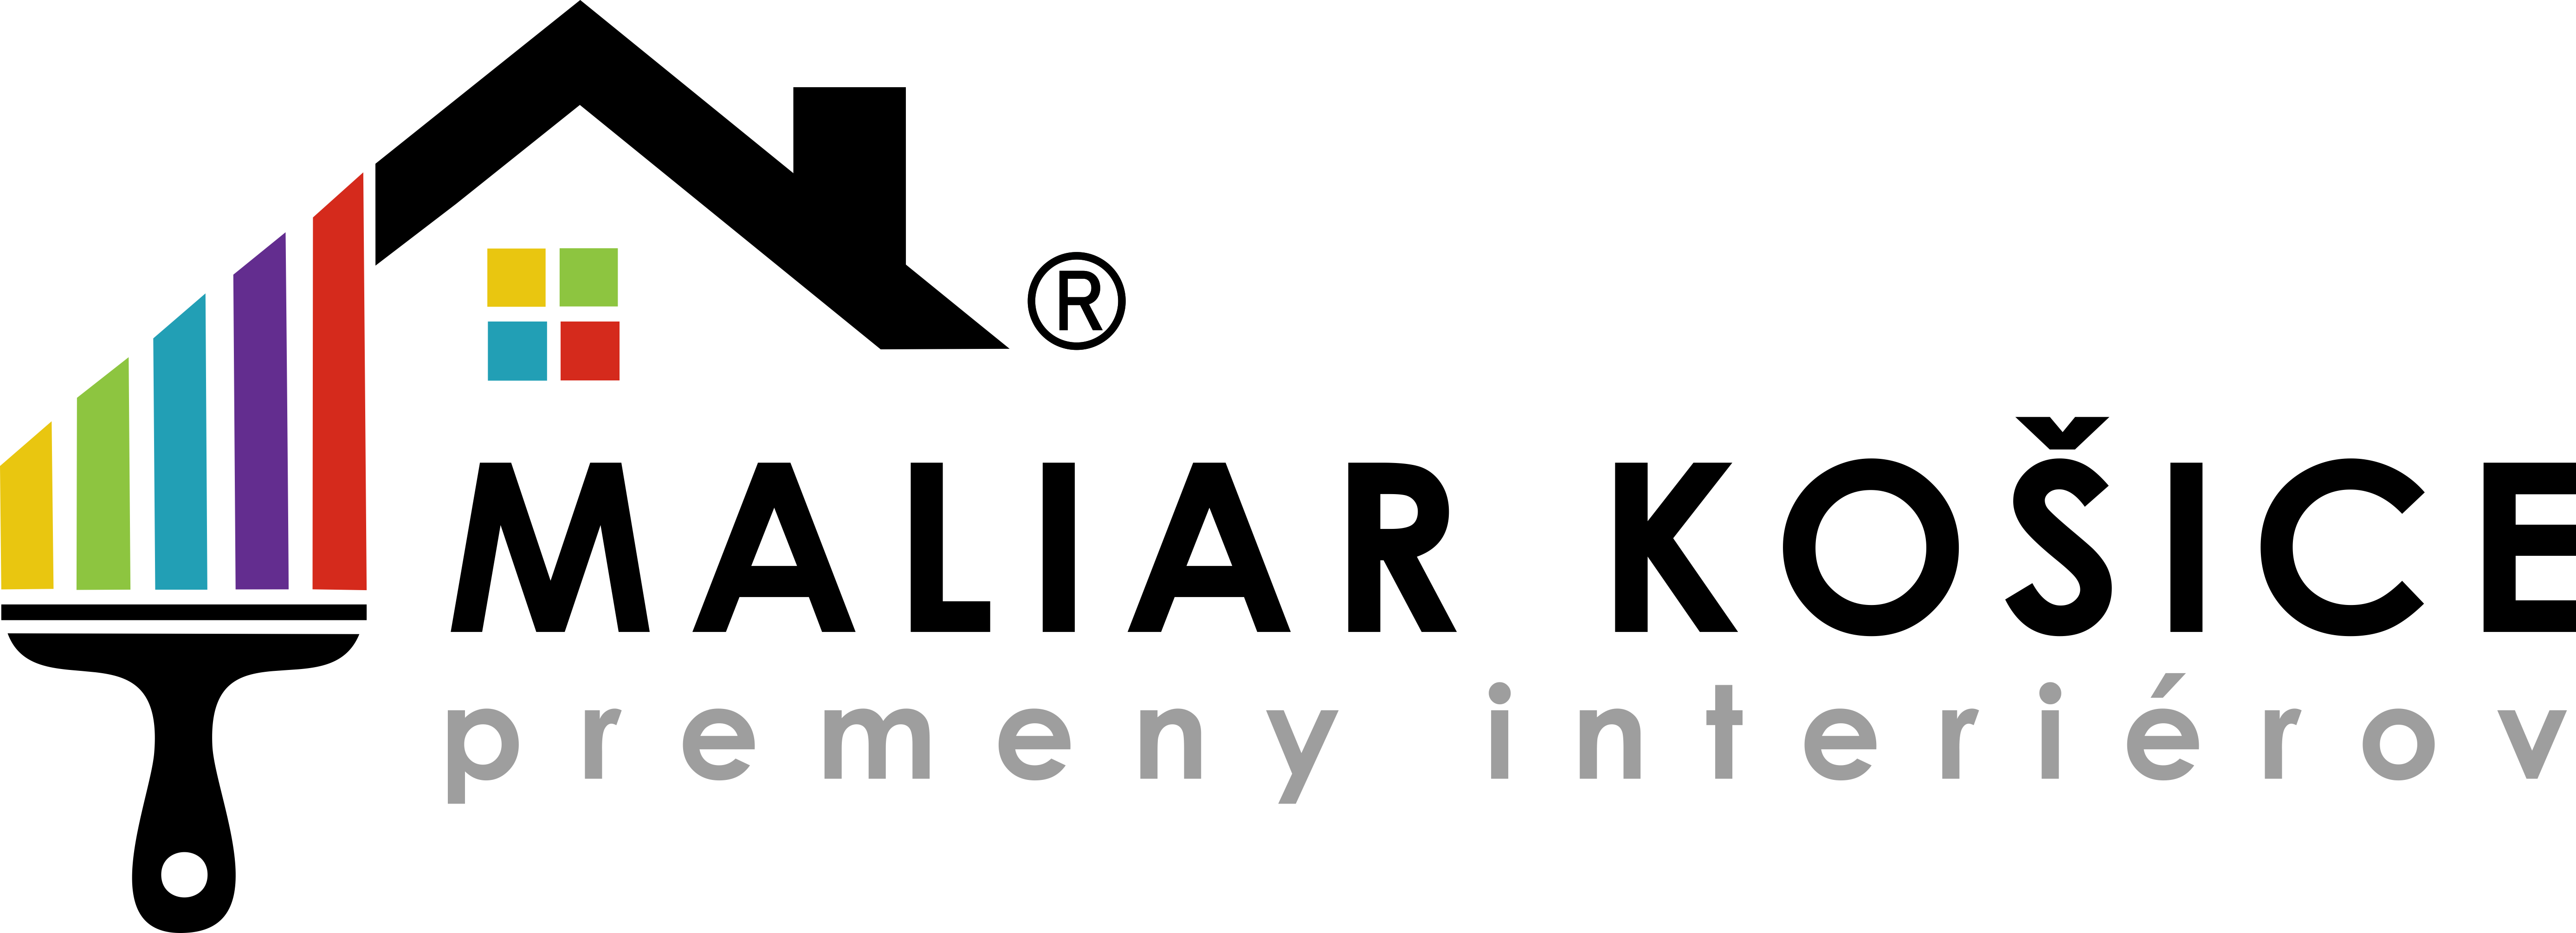 master farebne logo premeny interierov (1)